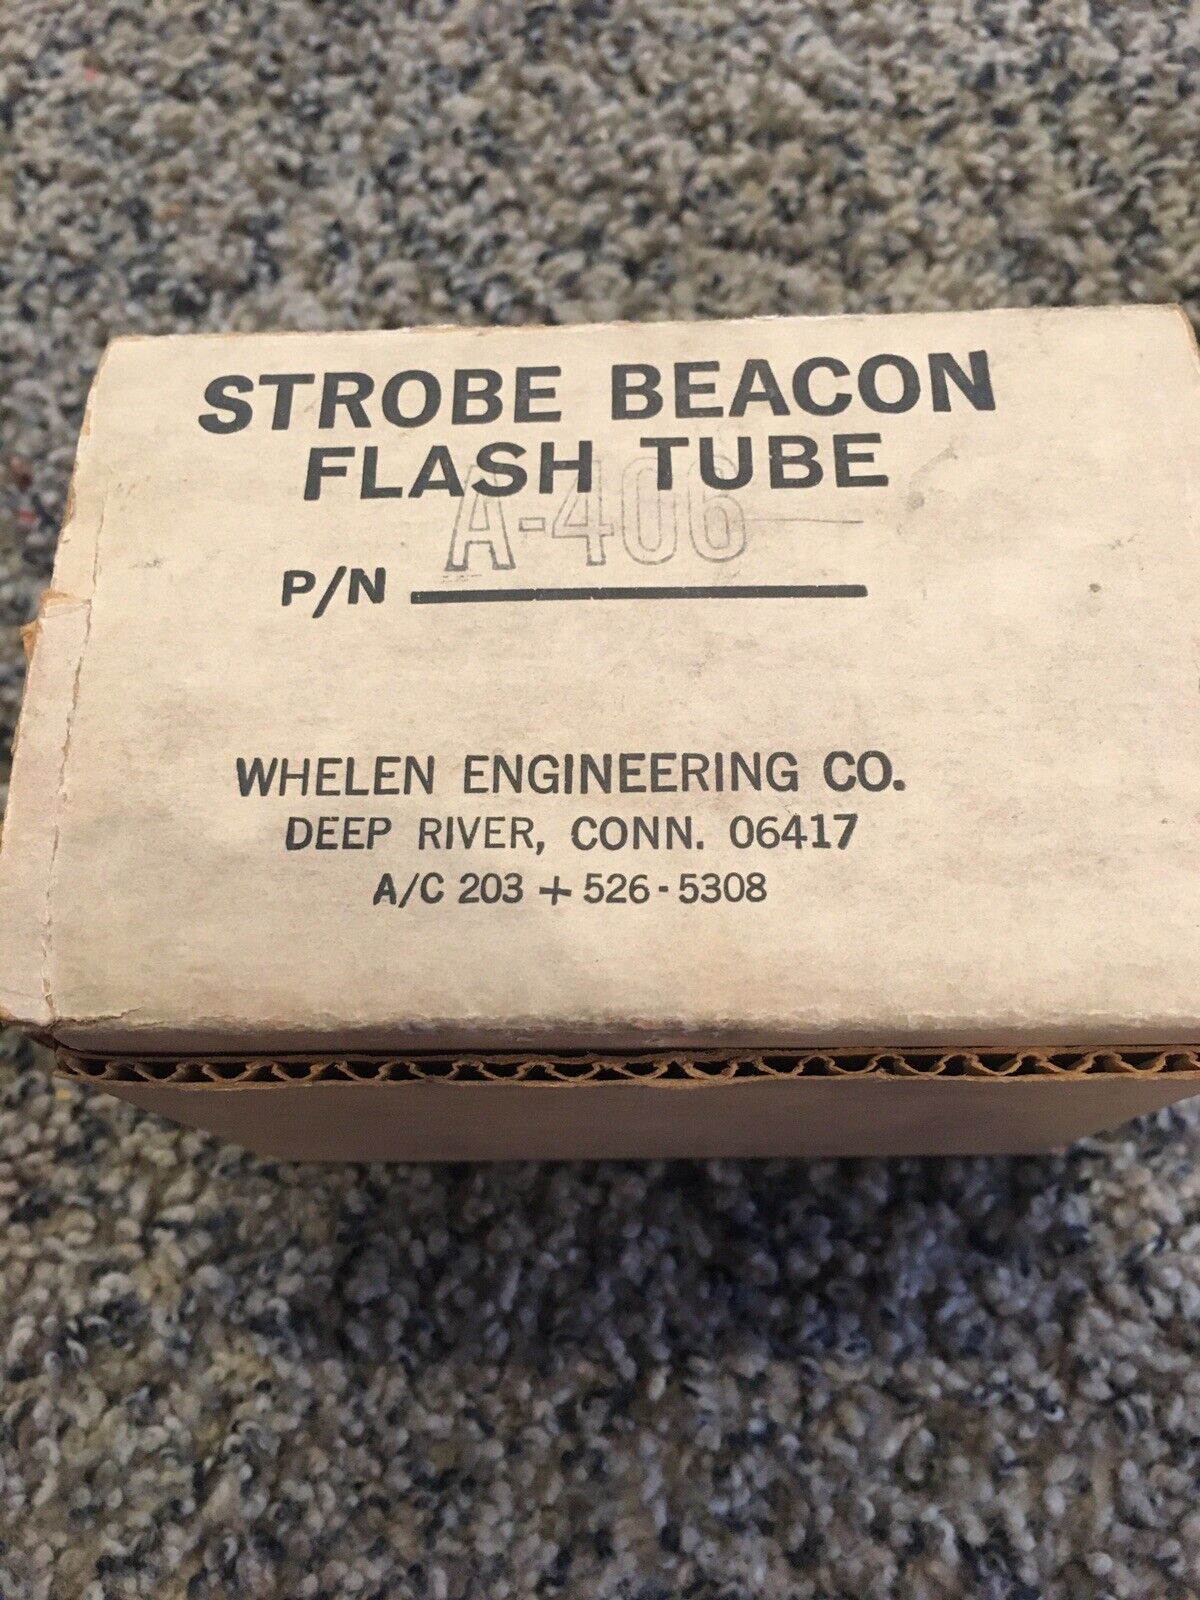 New Old Stock Strobe Beacon Flash Tube Part A-400